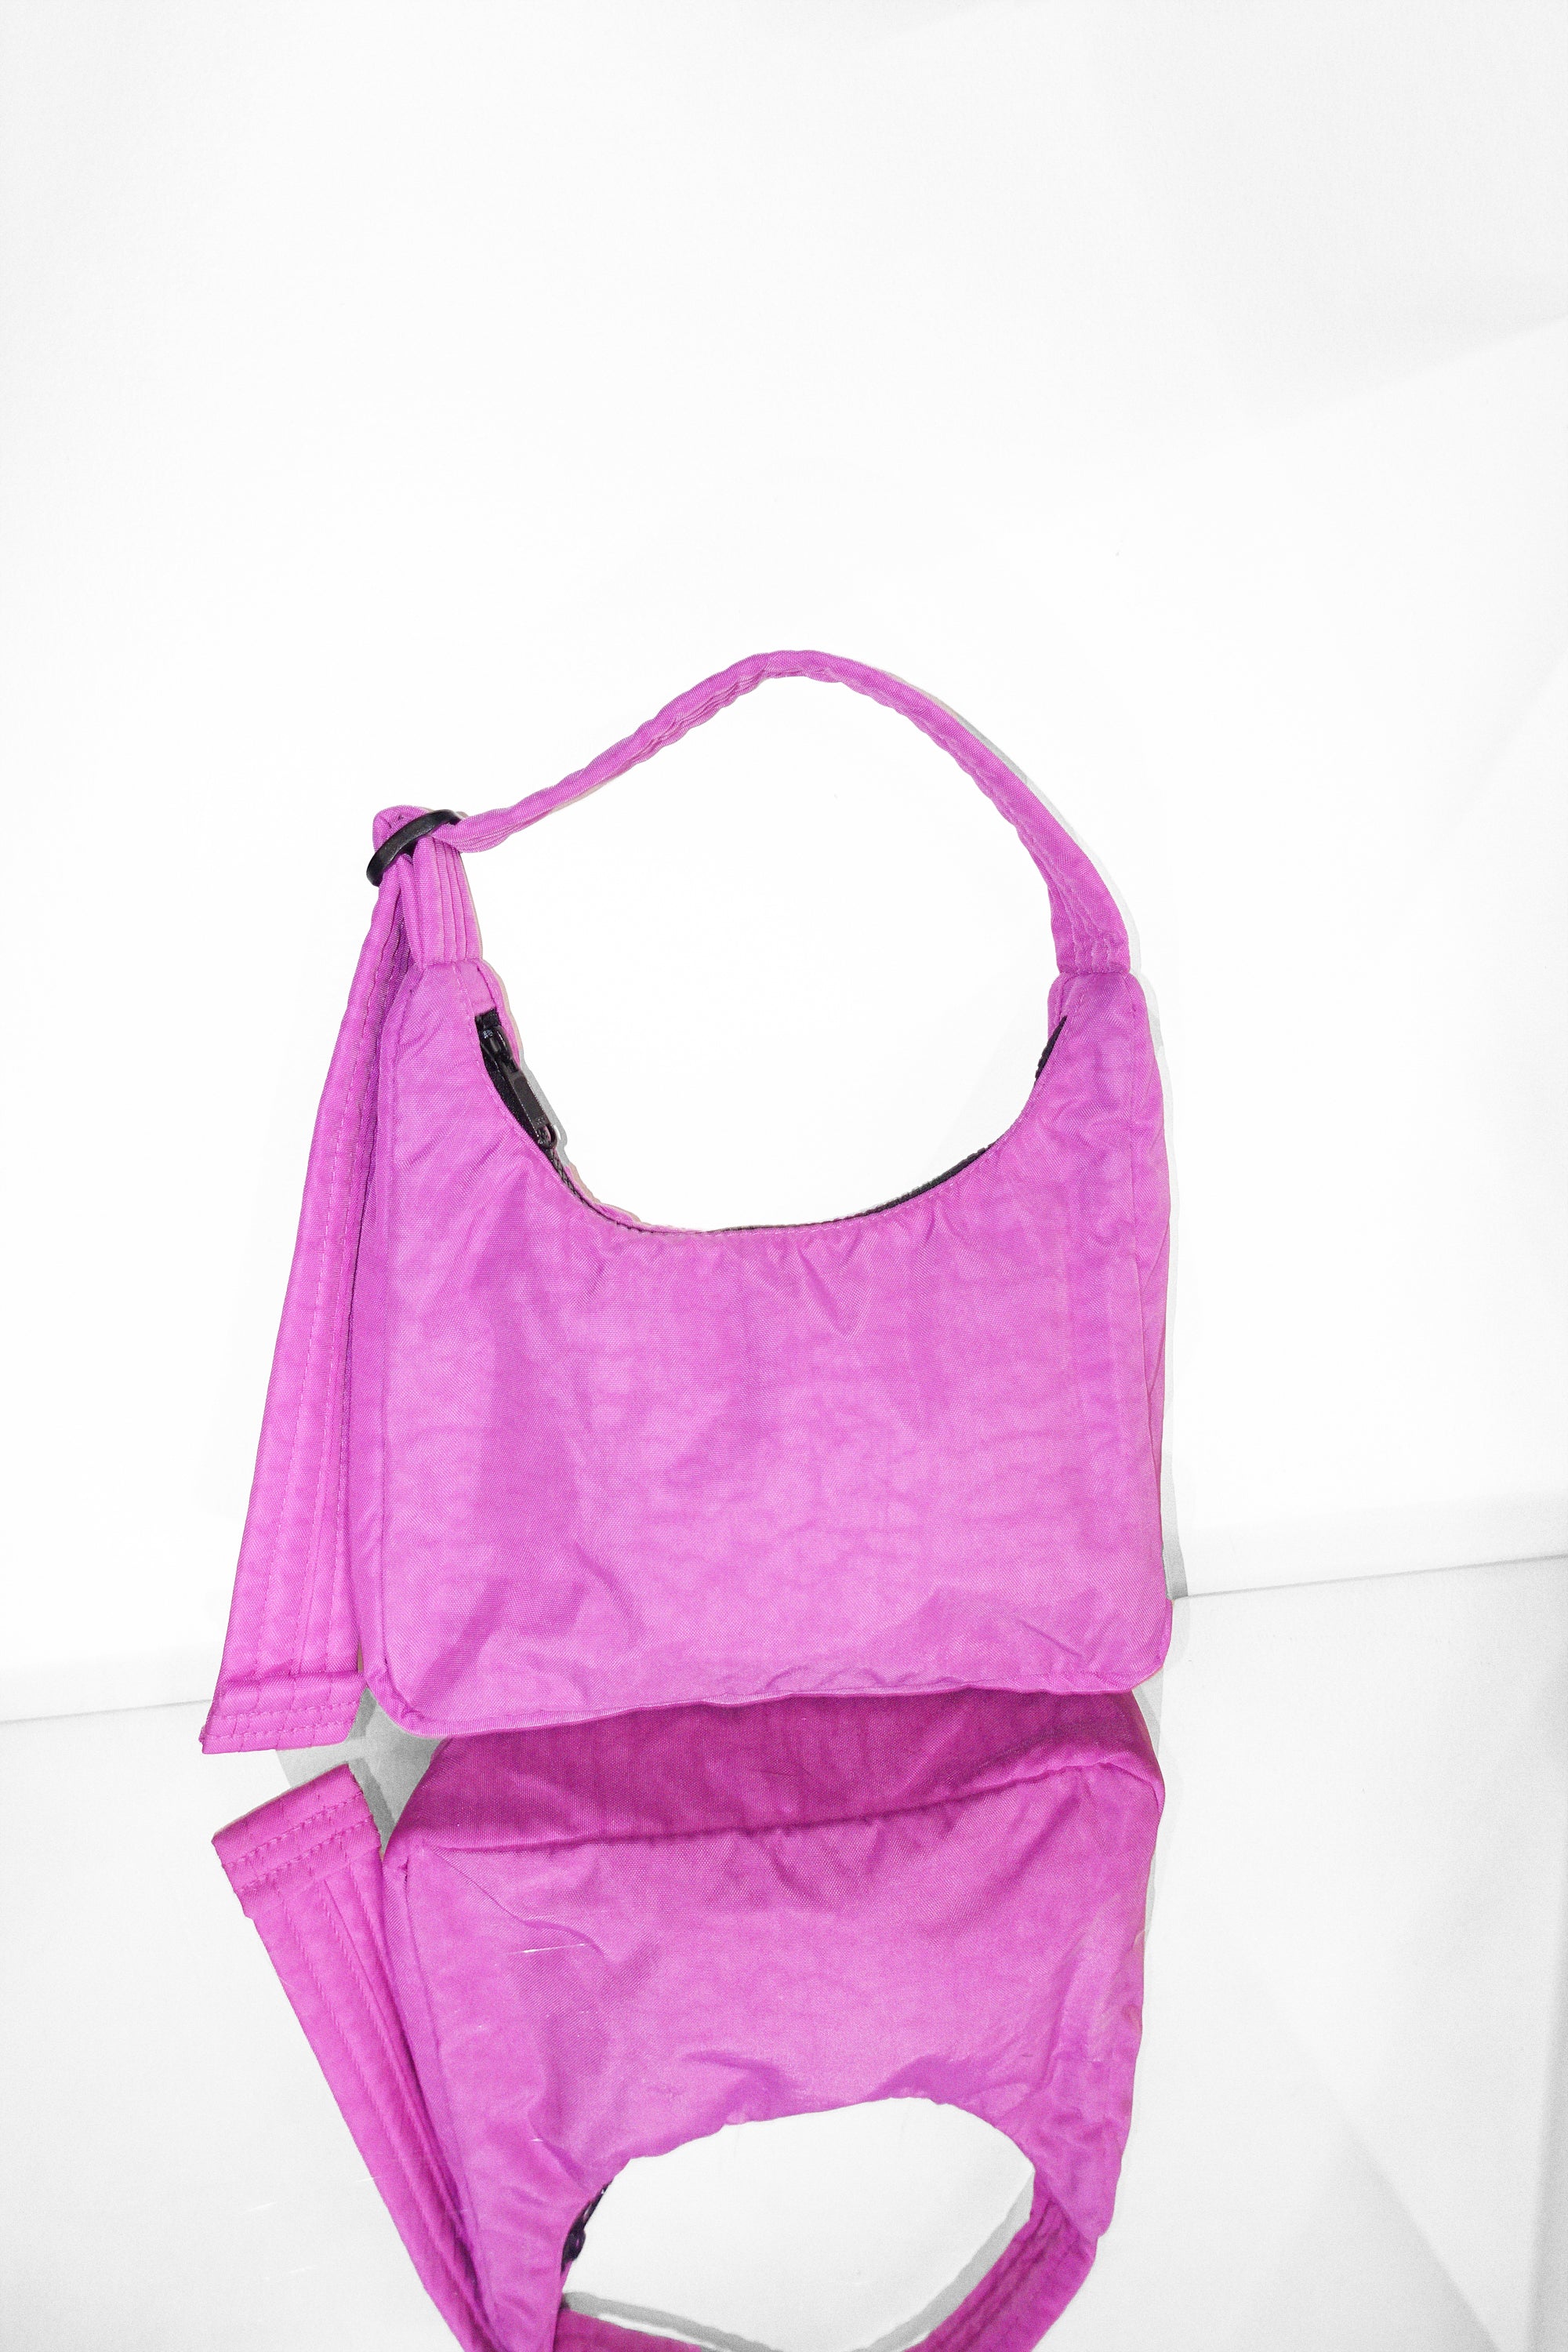 Baggu - Mini Nylon Shoulder Bag - Extra Pink